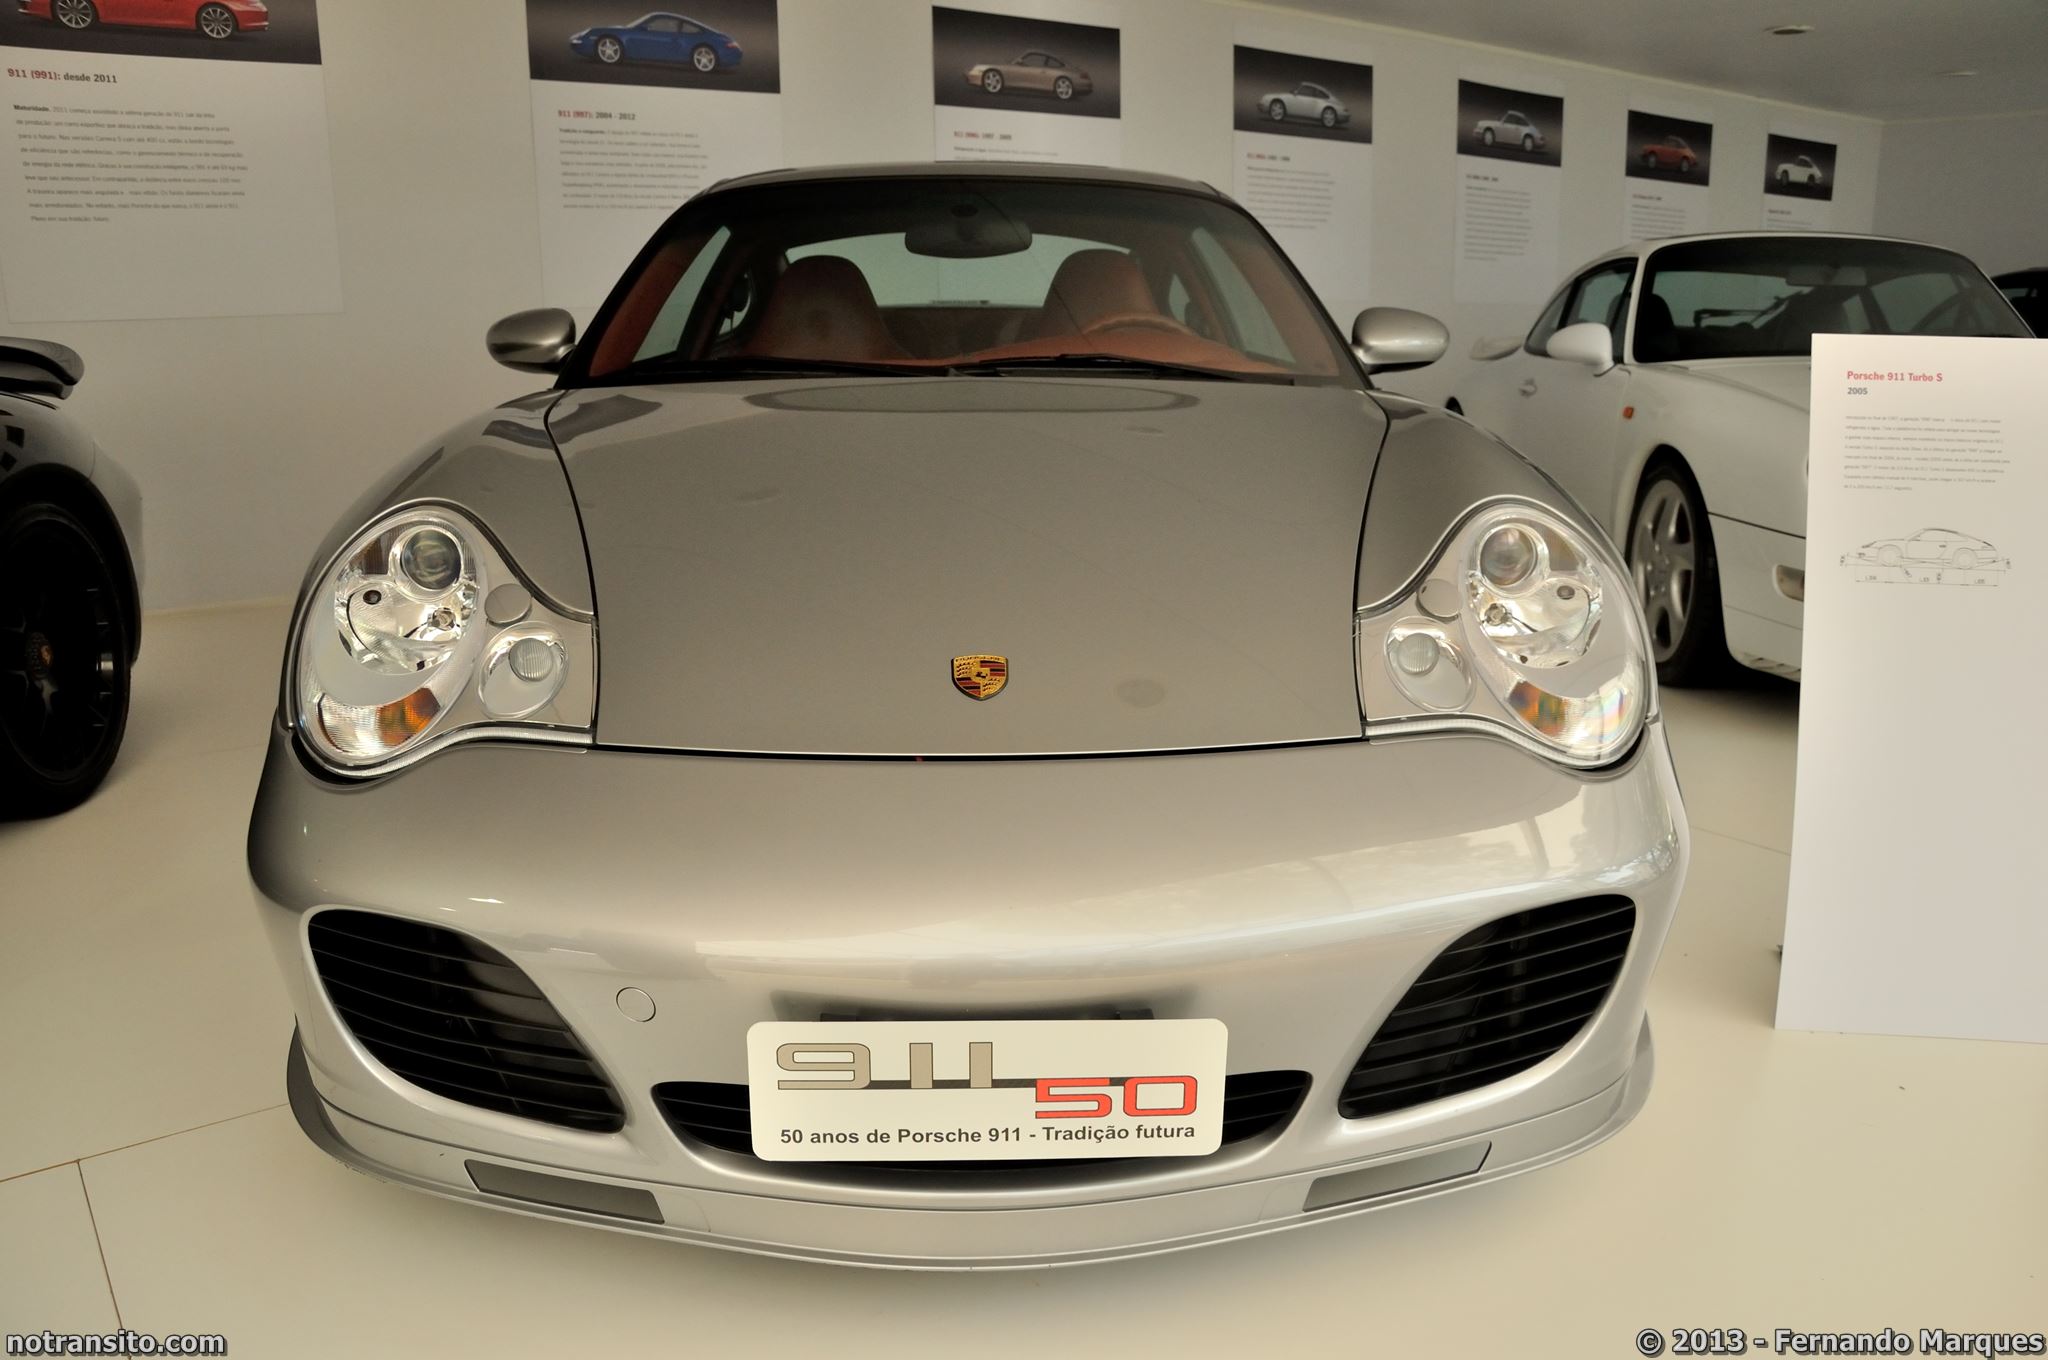 Porsche 911 Turbo S Type 996, Auto Premium Show 2013